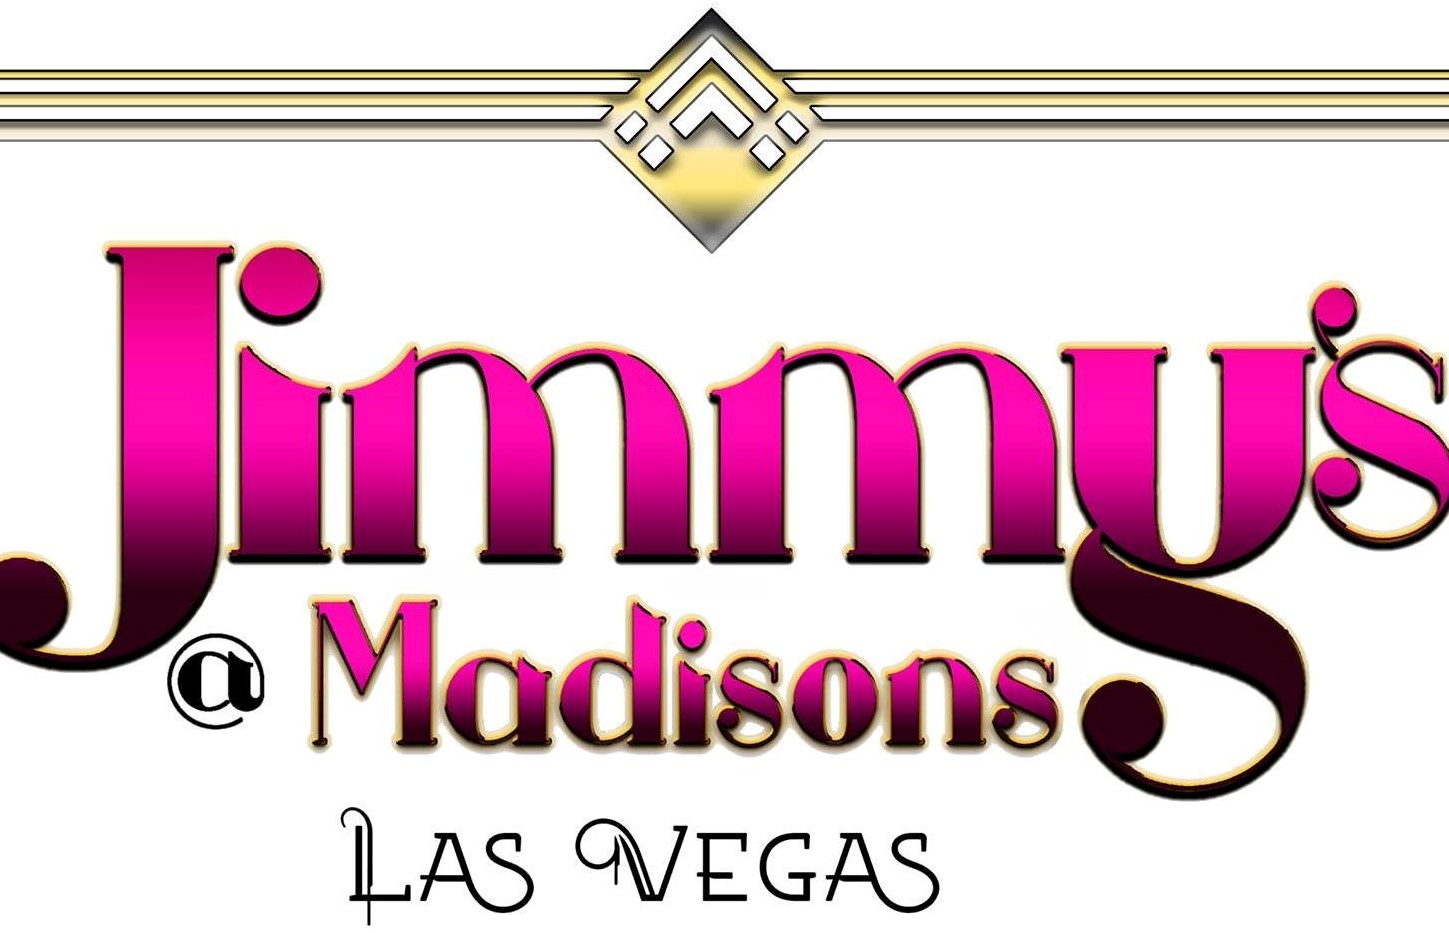 Jimmy's @ Madison's (Las Vegas, Nevada)